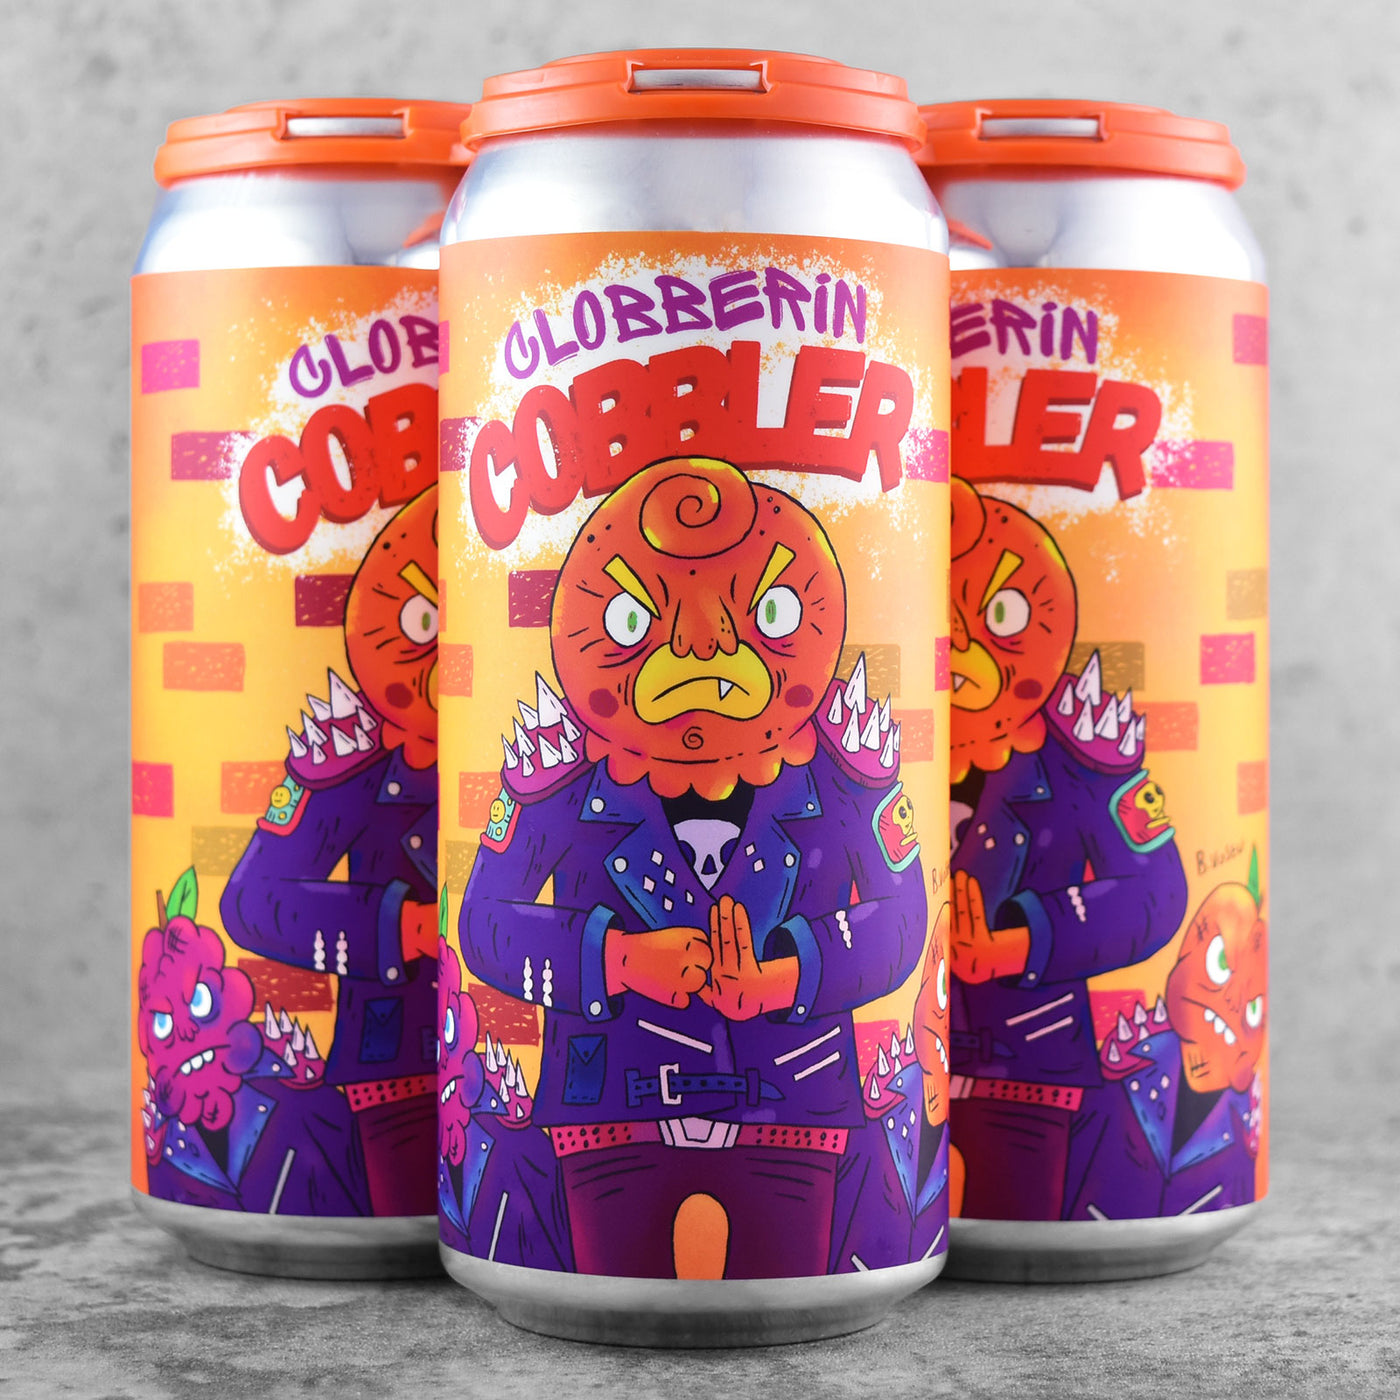 The Brewing Projekt Clobberin' Cobbler